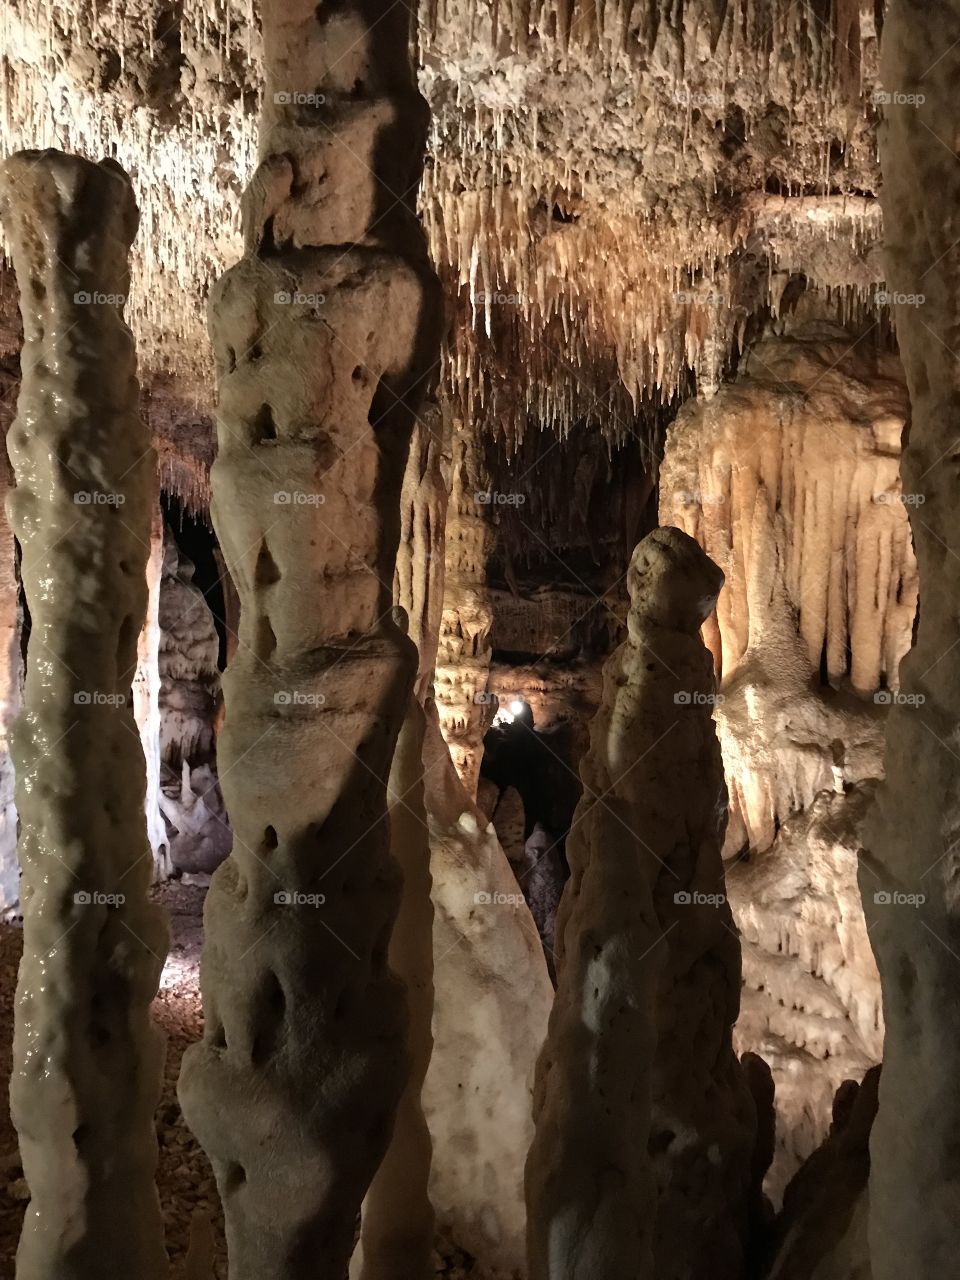 Blanchard Springs Caverns 